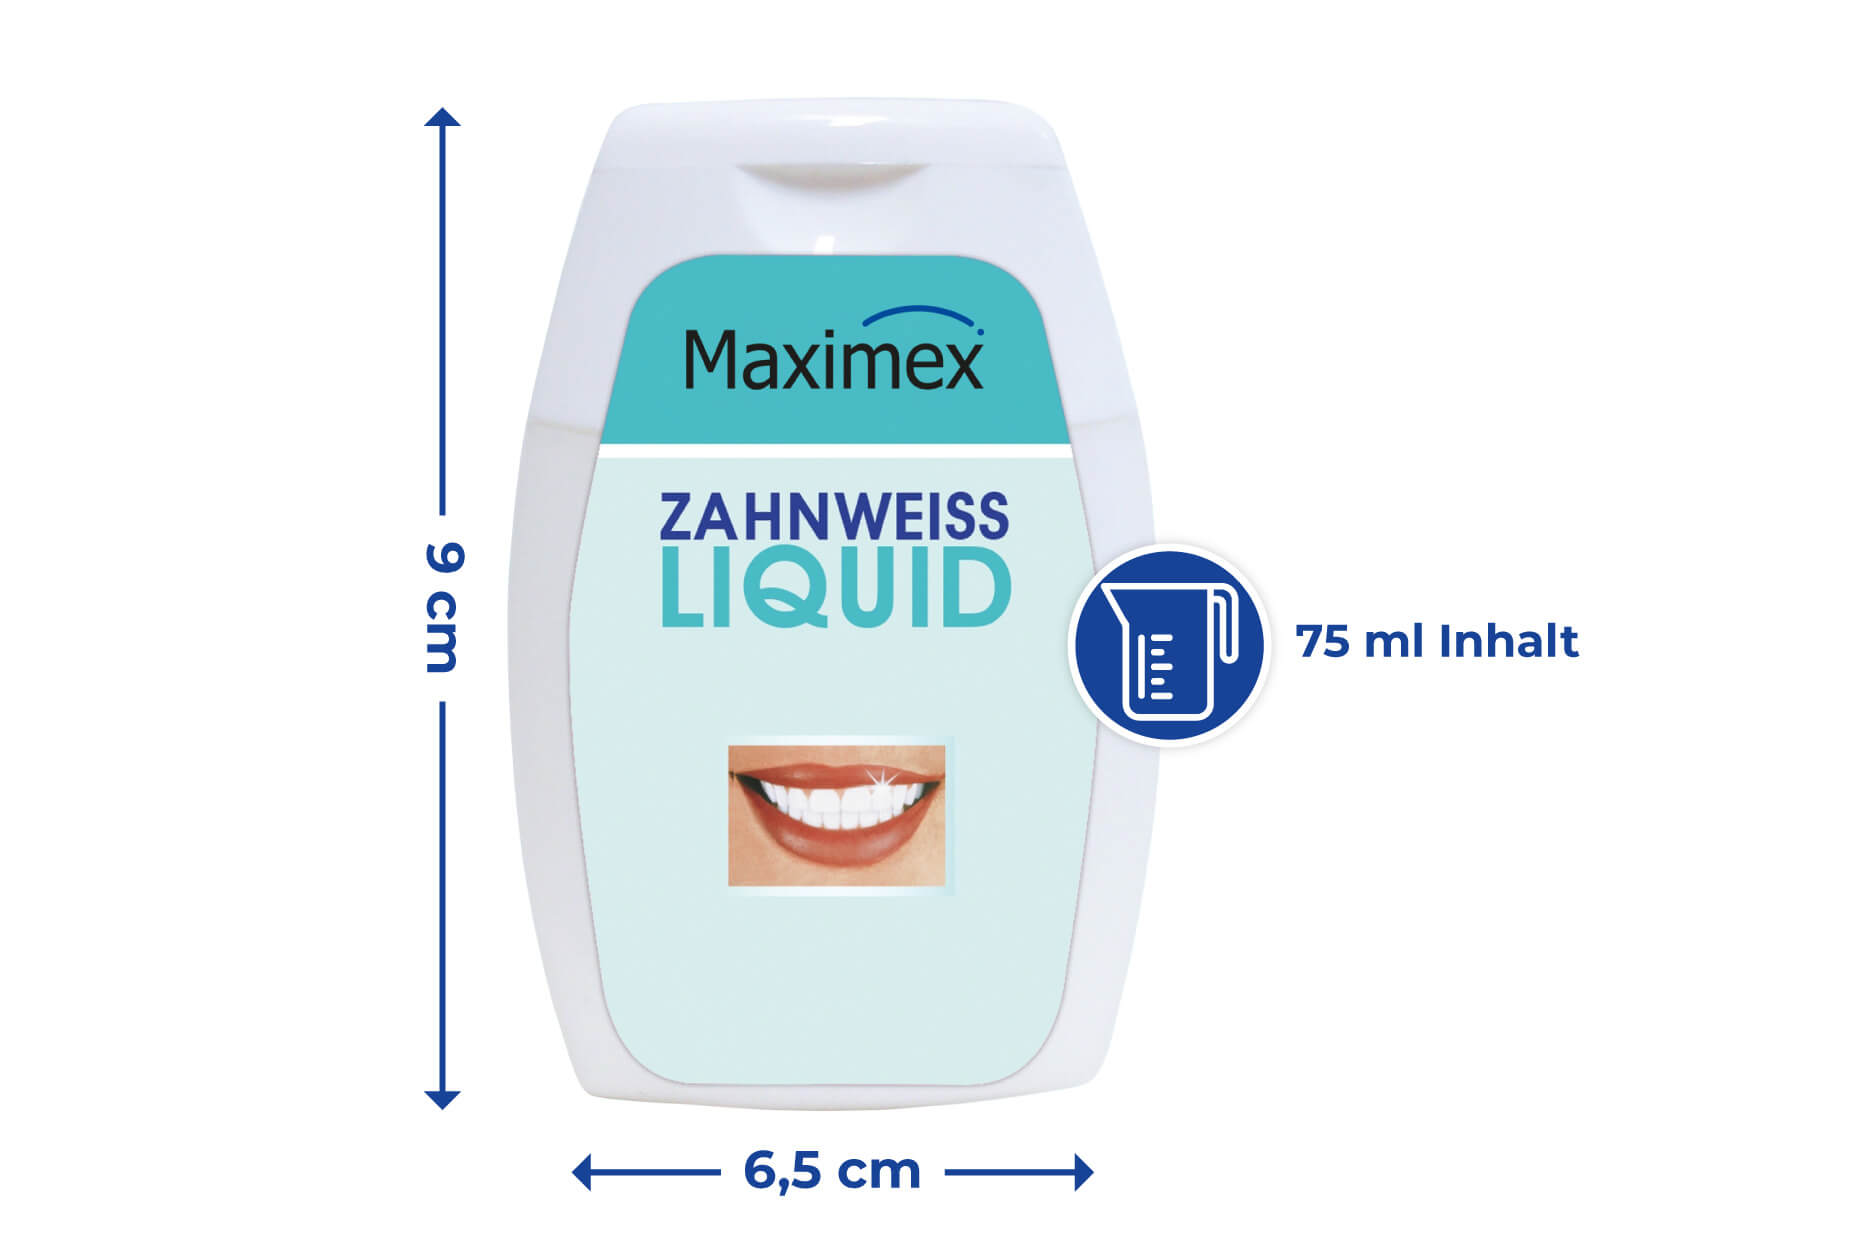 Zahnweiß-Liquid, 75 ml